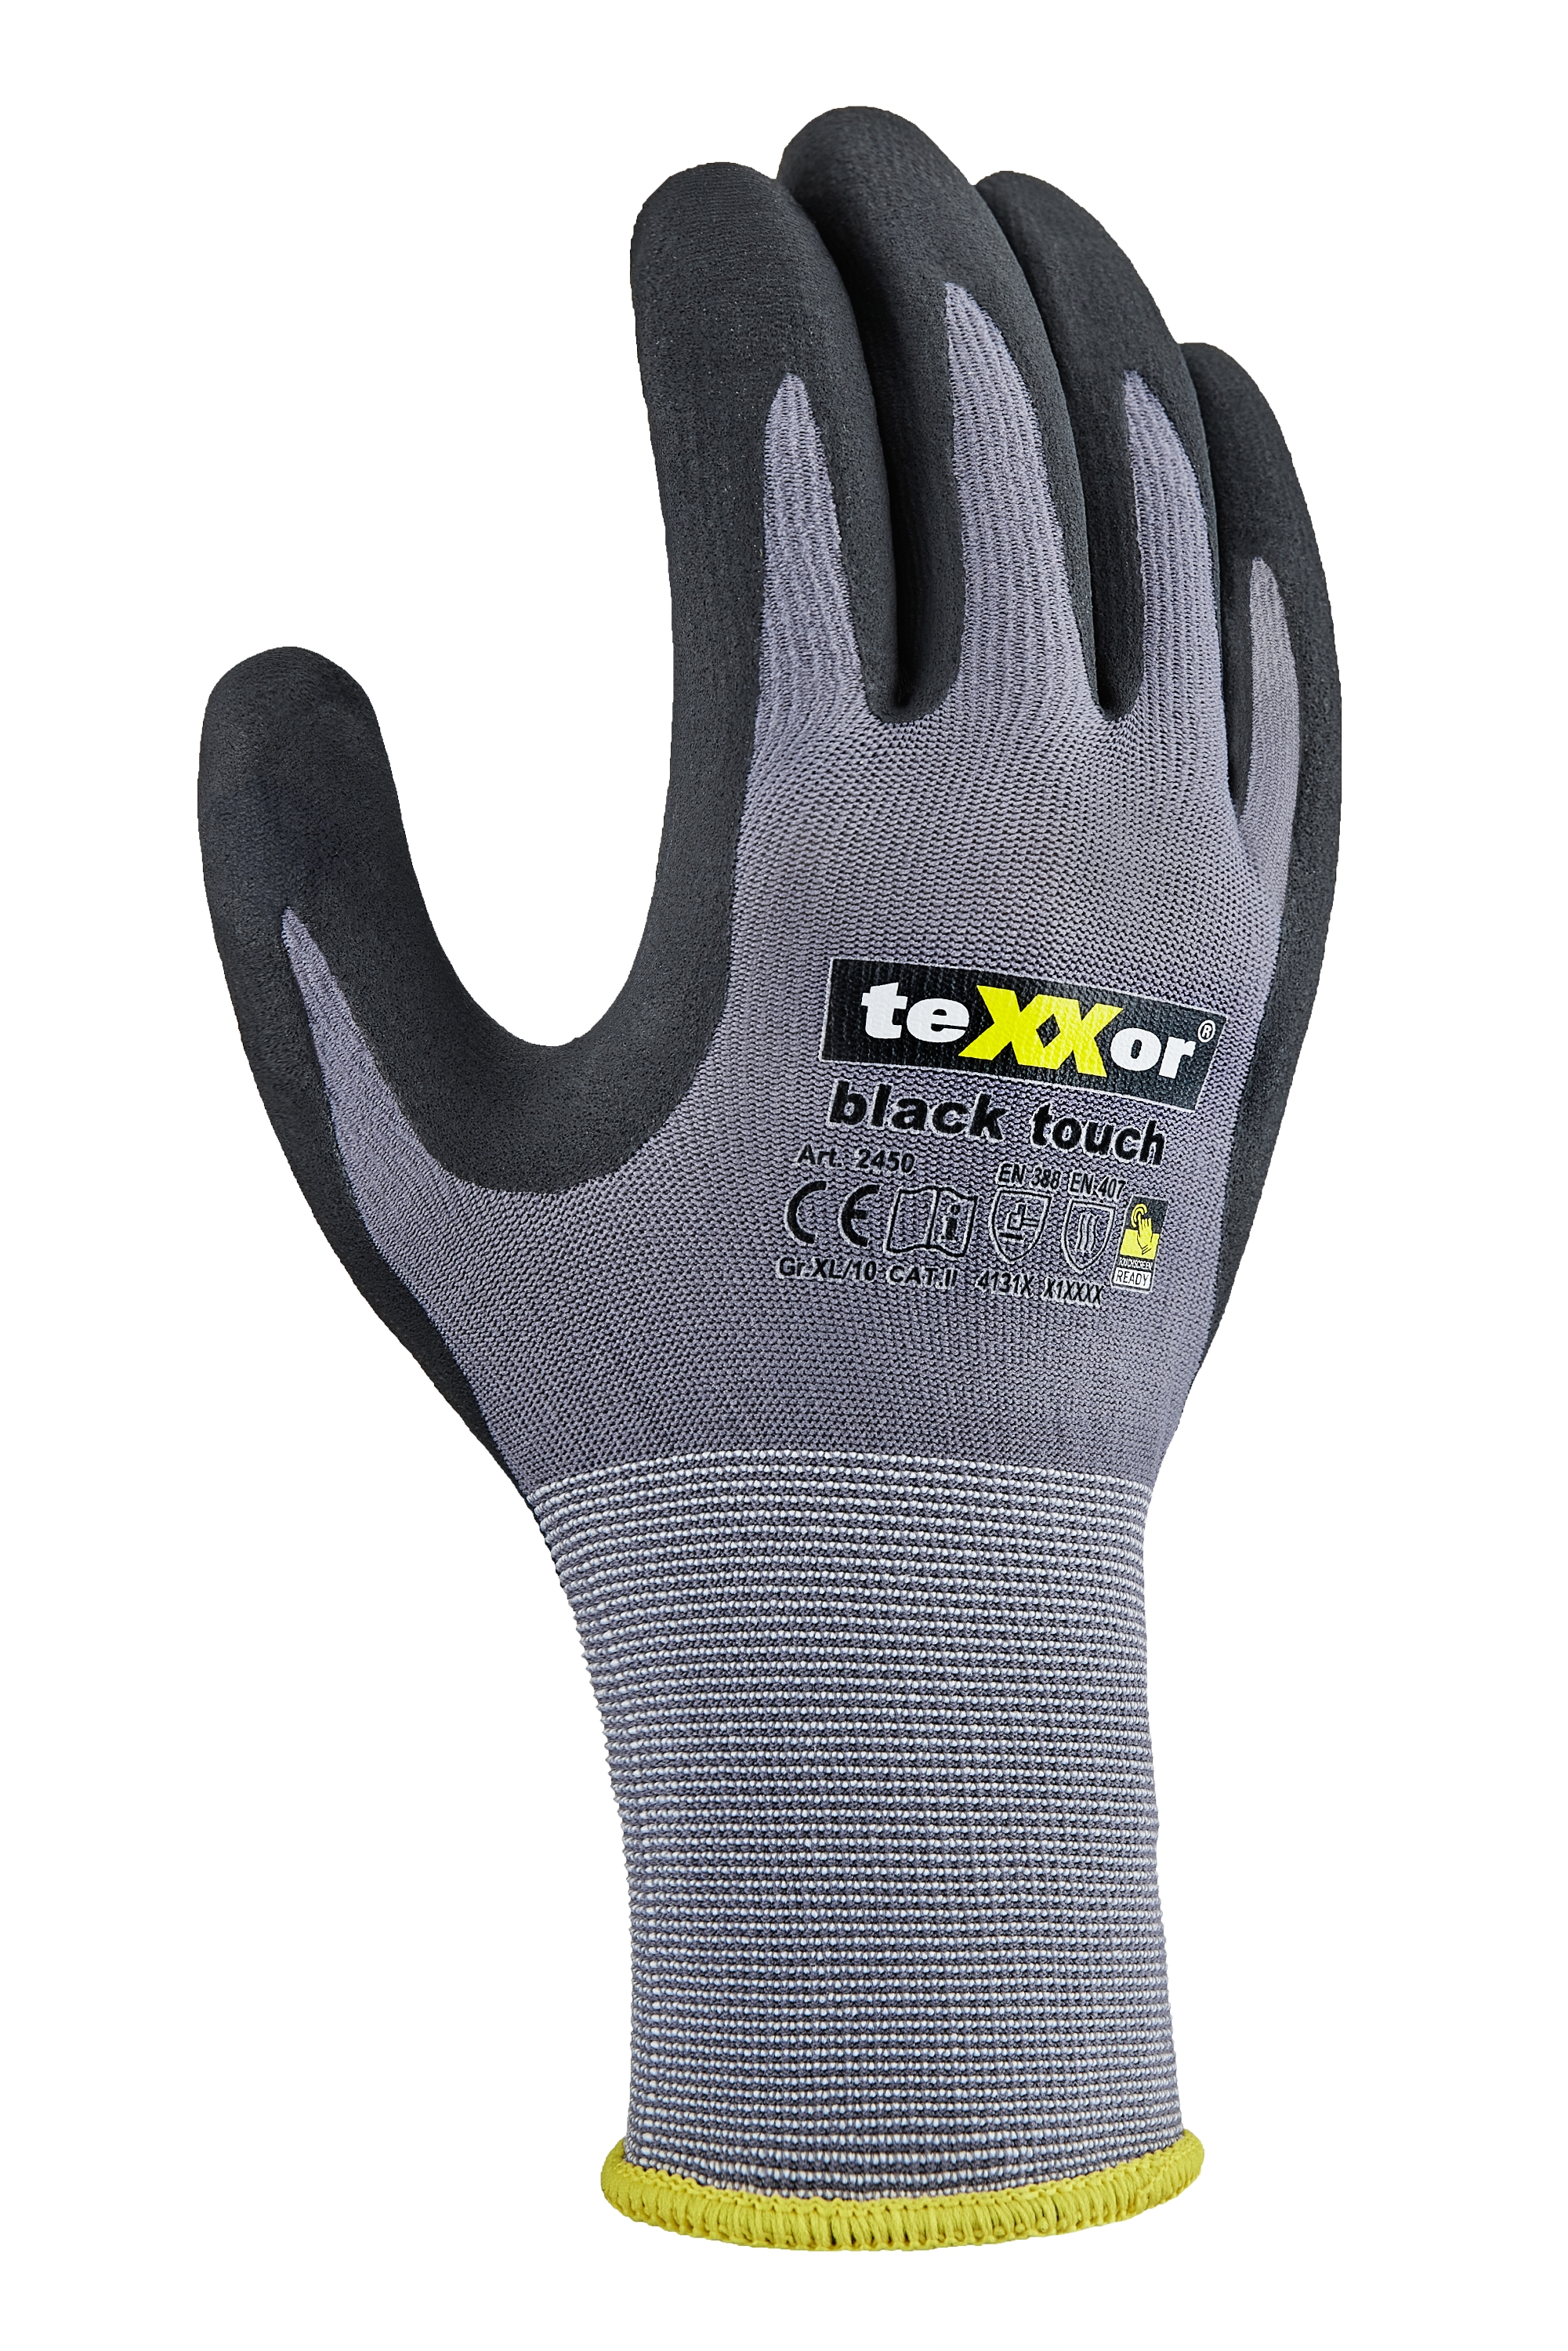 teXXor® Nylon-Strickhandschuhe black touch® grau/schwarz